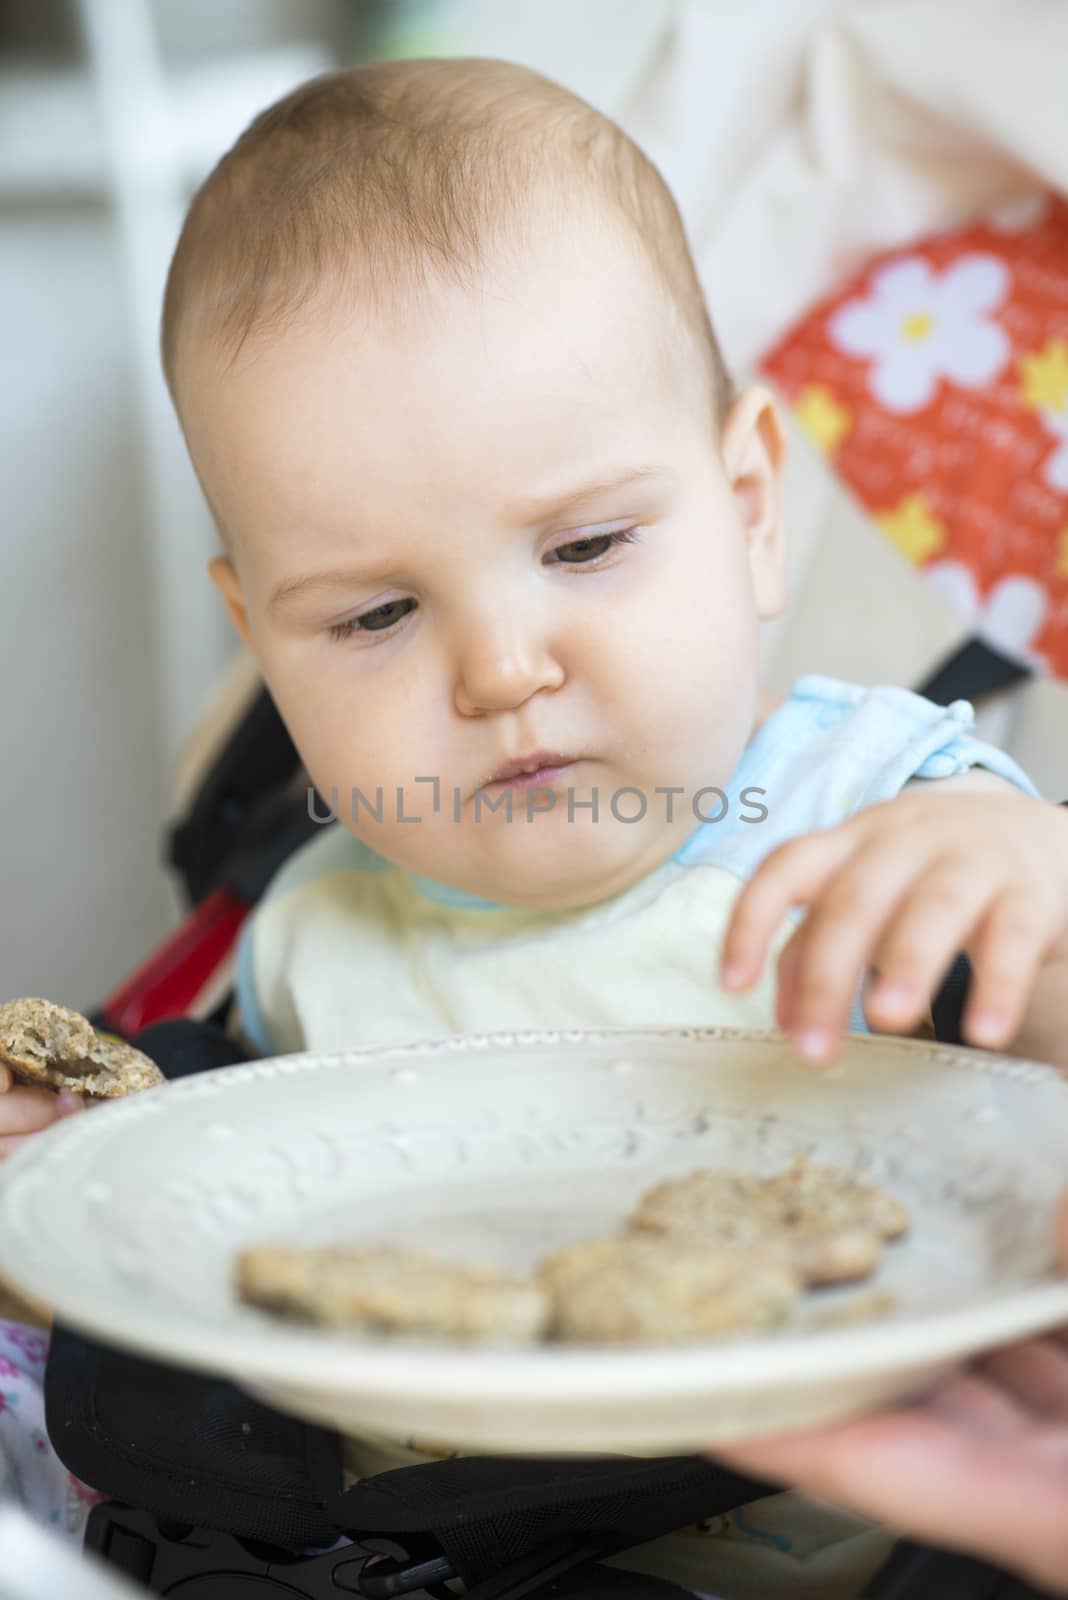 Baby eats alone. by deyan_georgiev